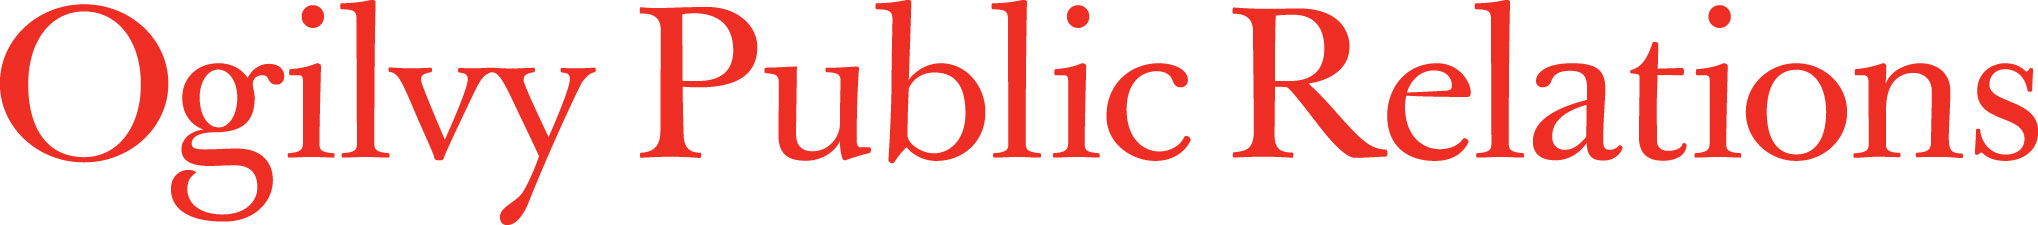  Leading Digital Public Relations Agency Logo: Ogilvy Public Relations